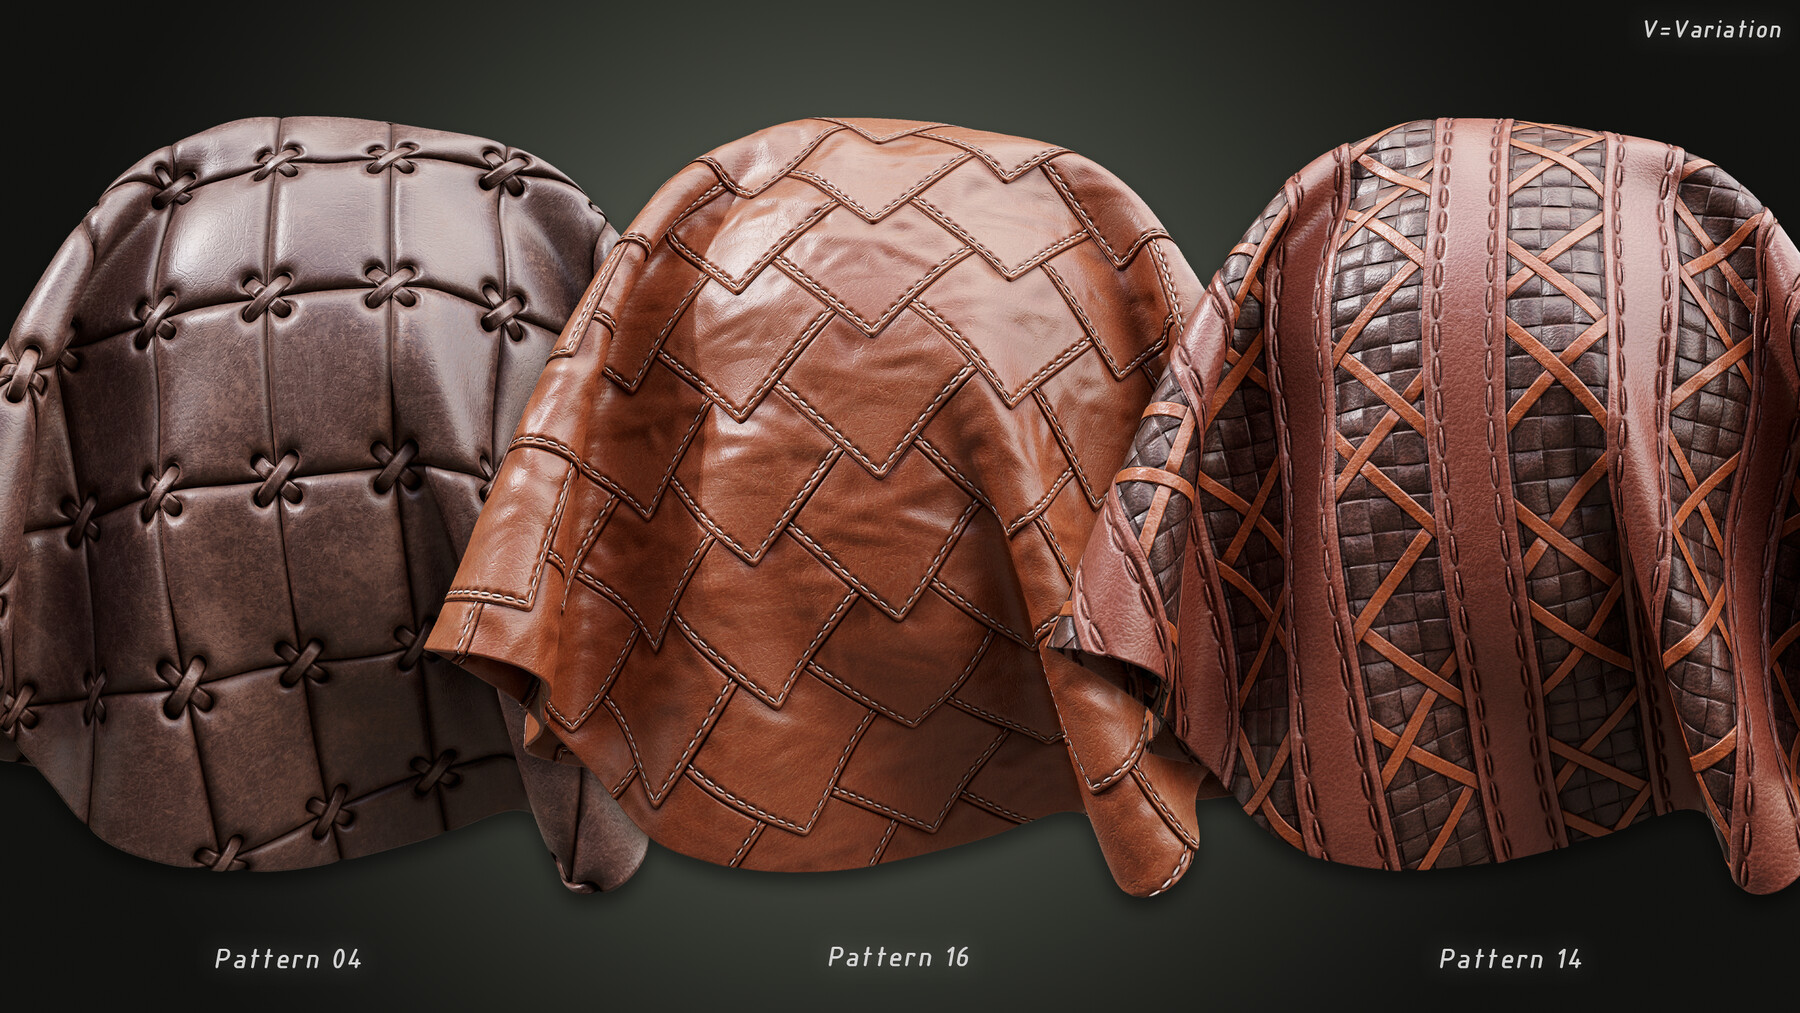 Stunning Woven Leather Armor